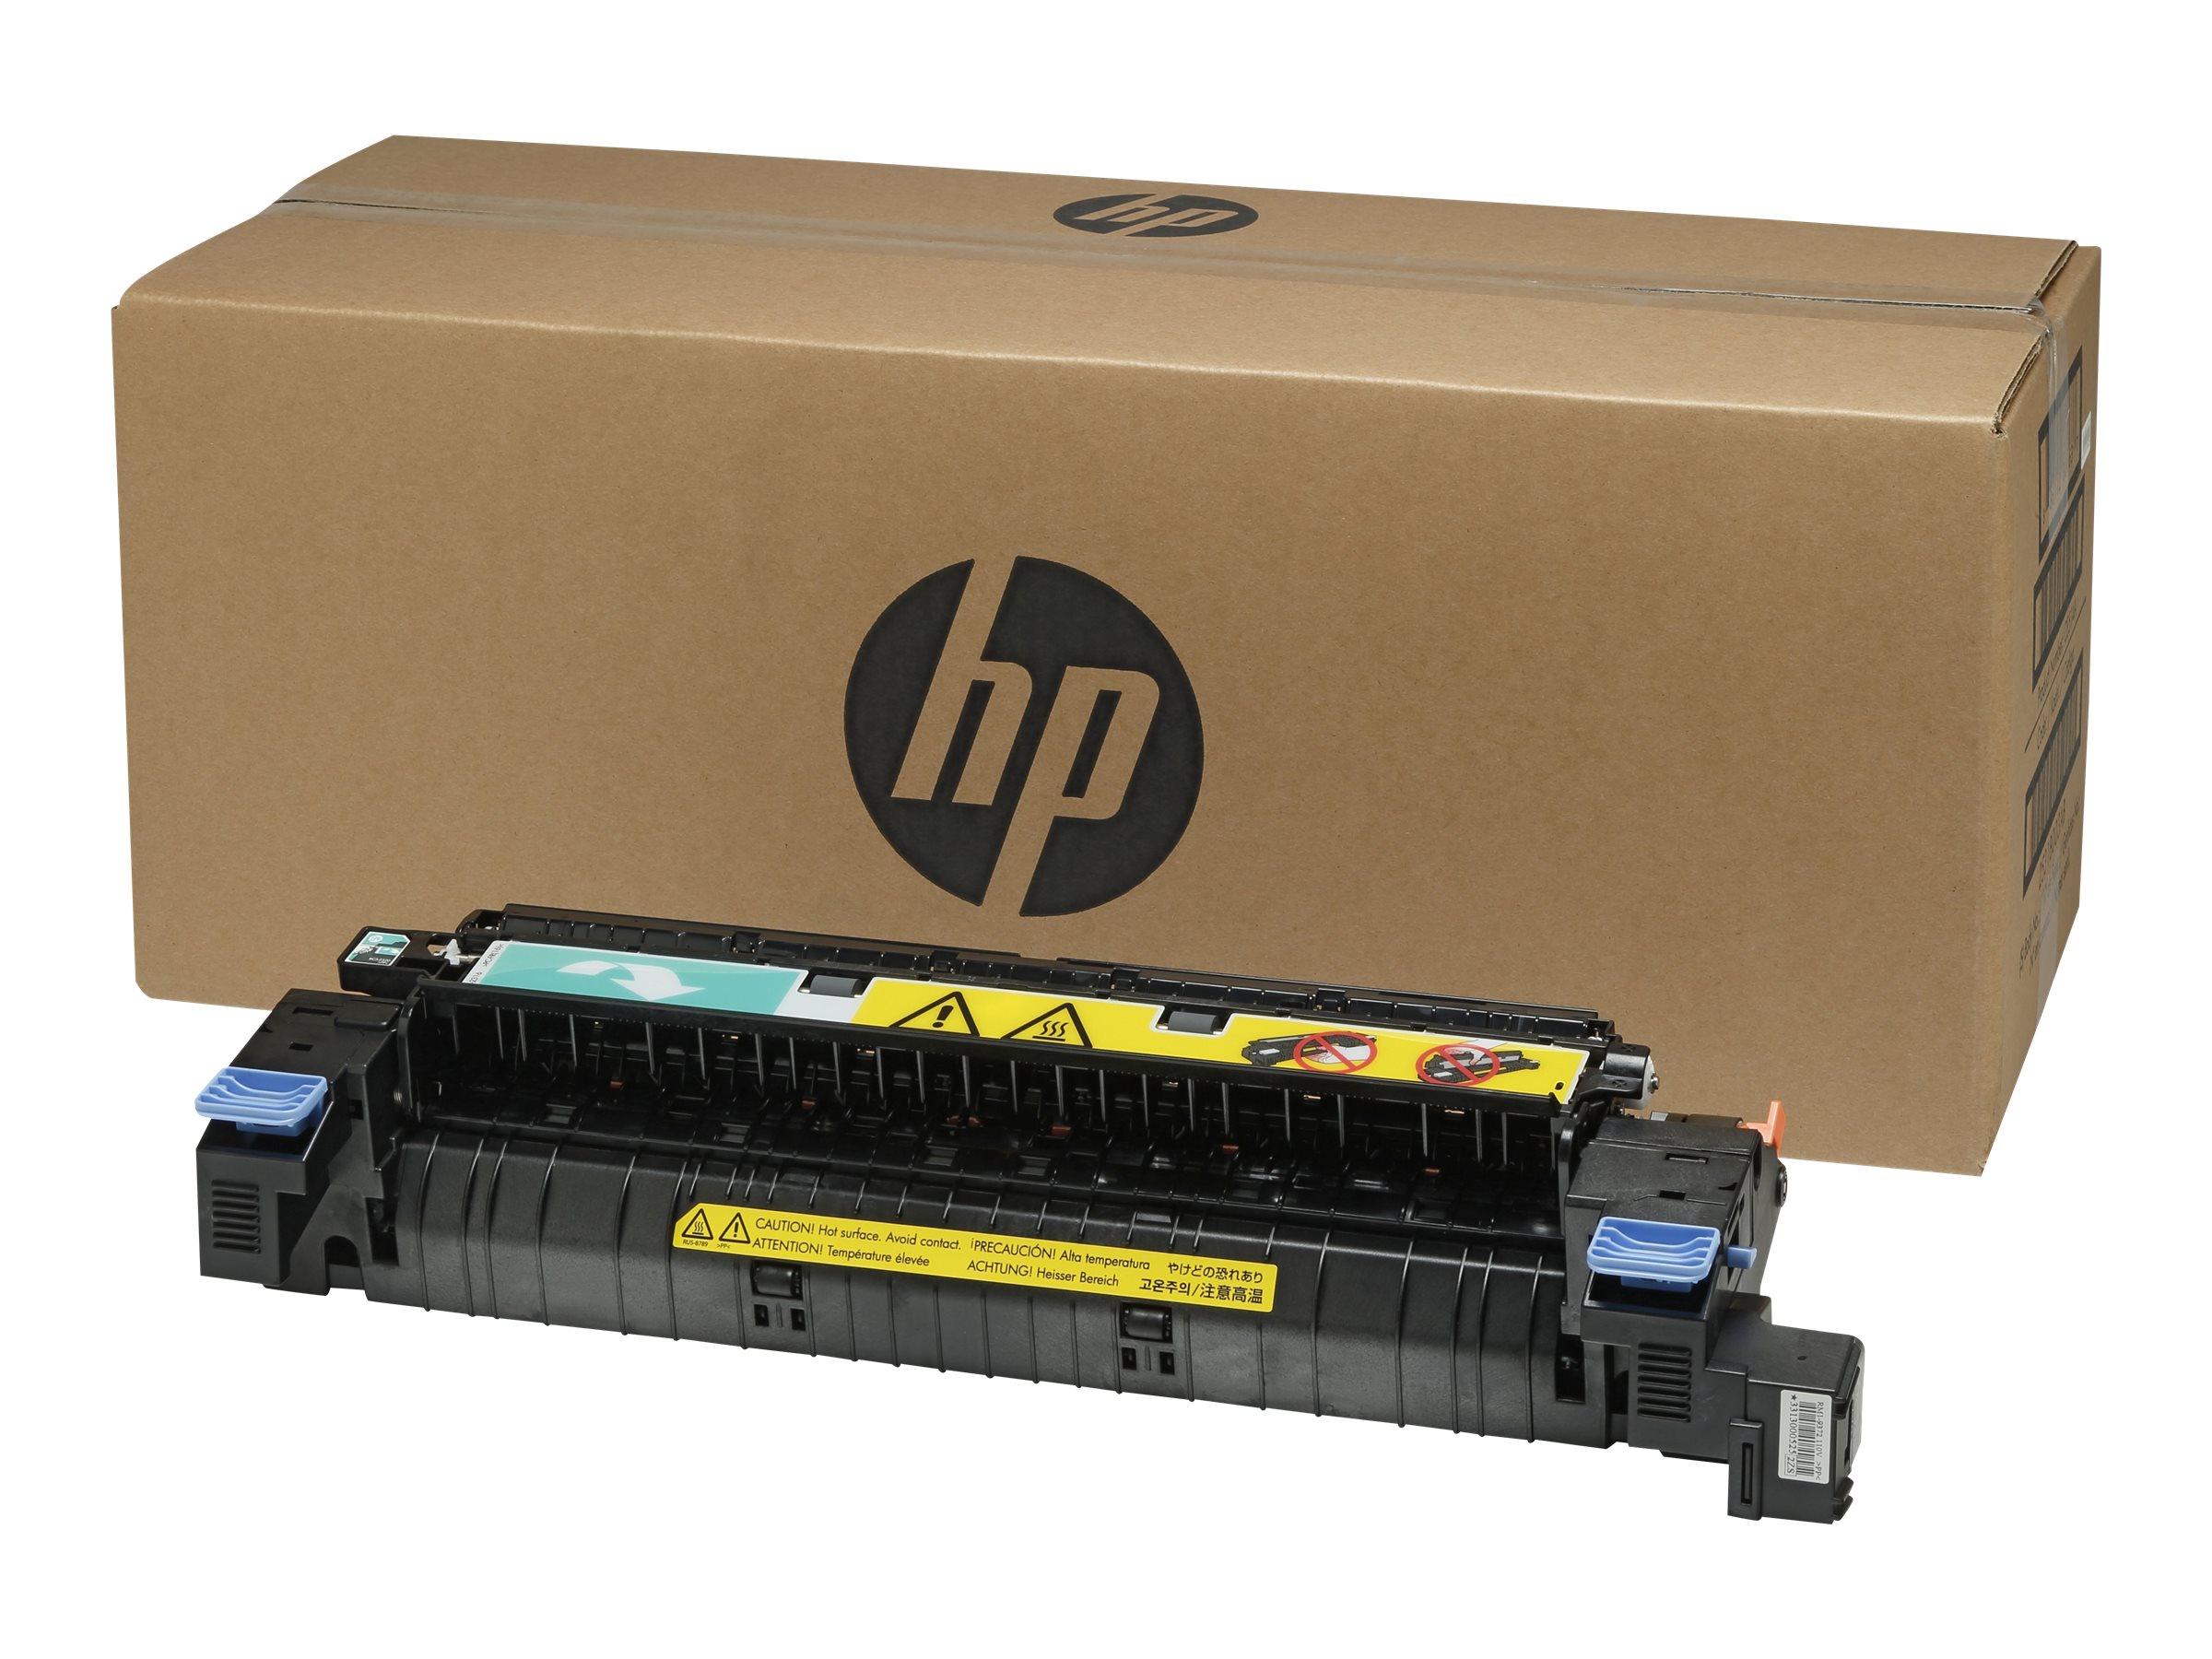 HP LaserJet New Rlrs C9152-69006 Exchange 9000 Maintenance Kit 